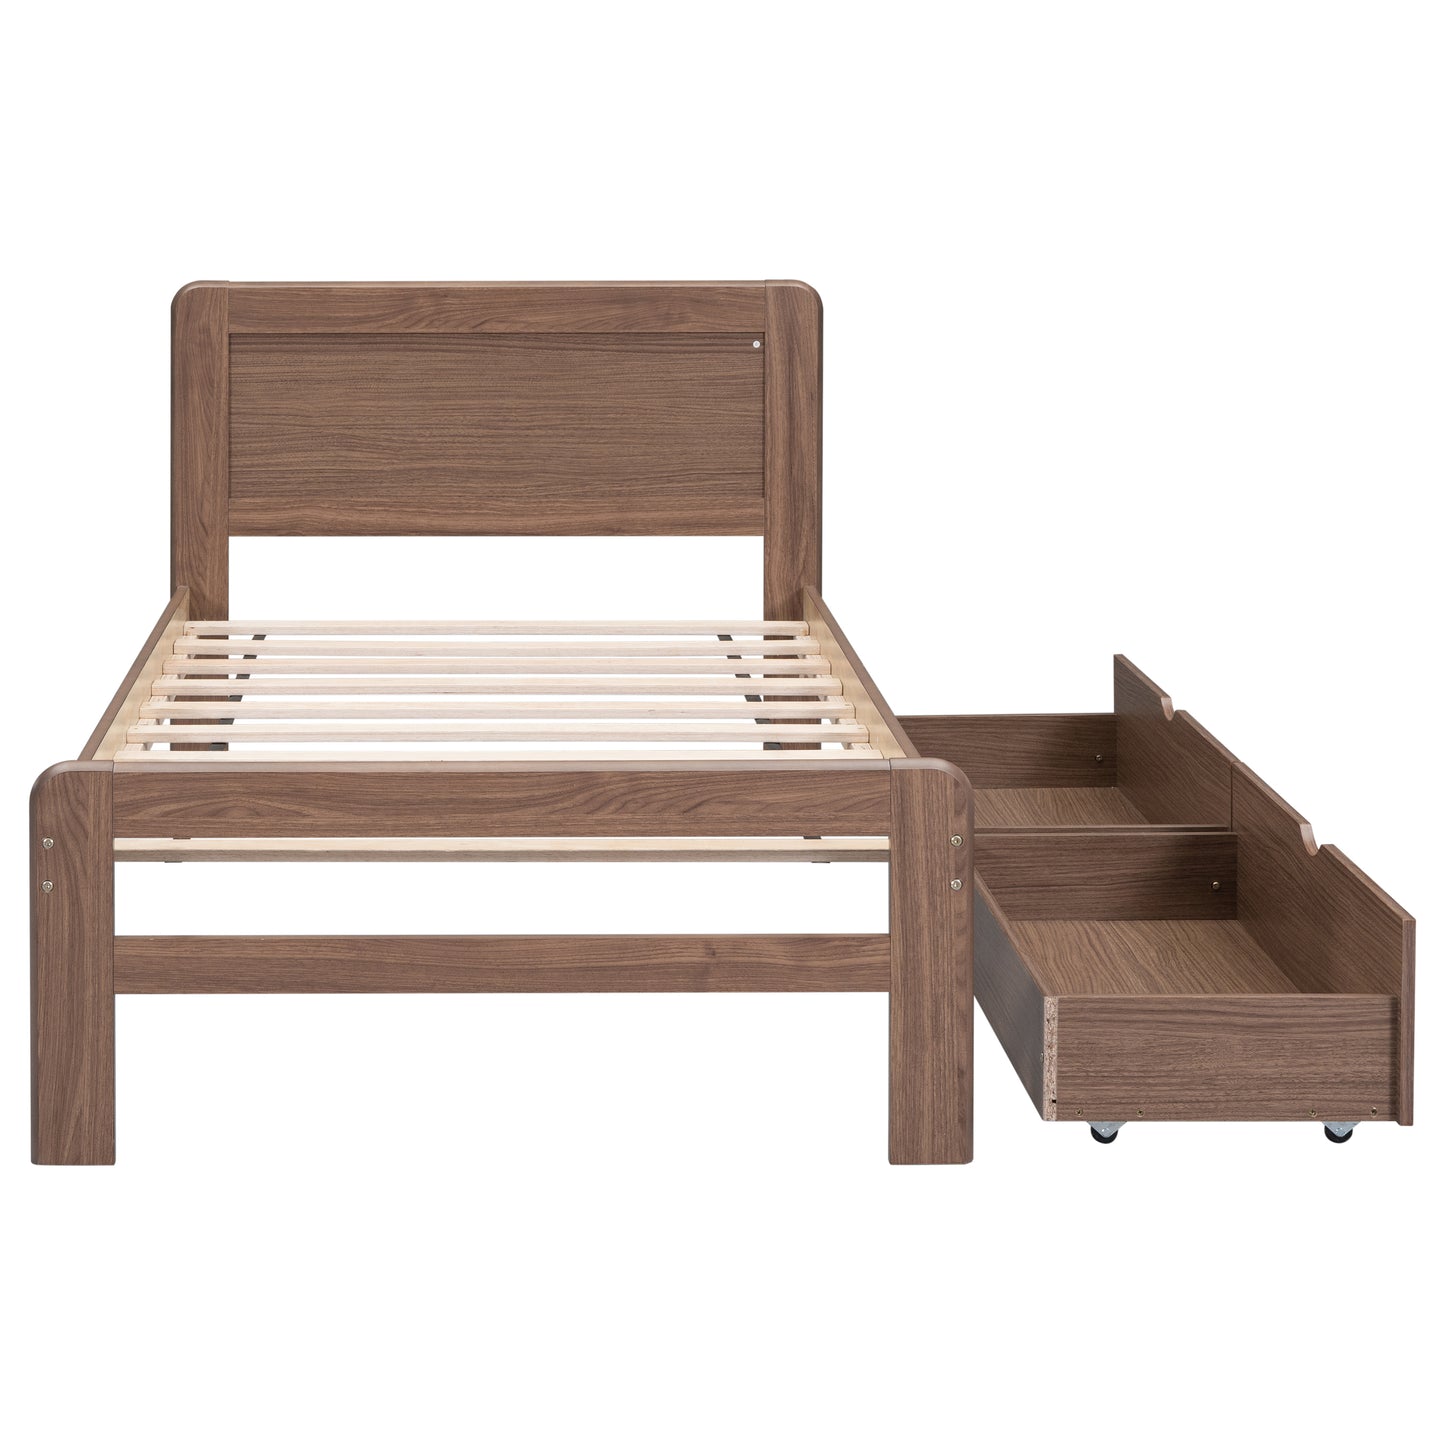 Modern Design Twin Size Platform Bed Frame with 2 Drawers for Walnut Color